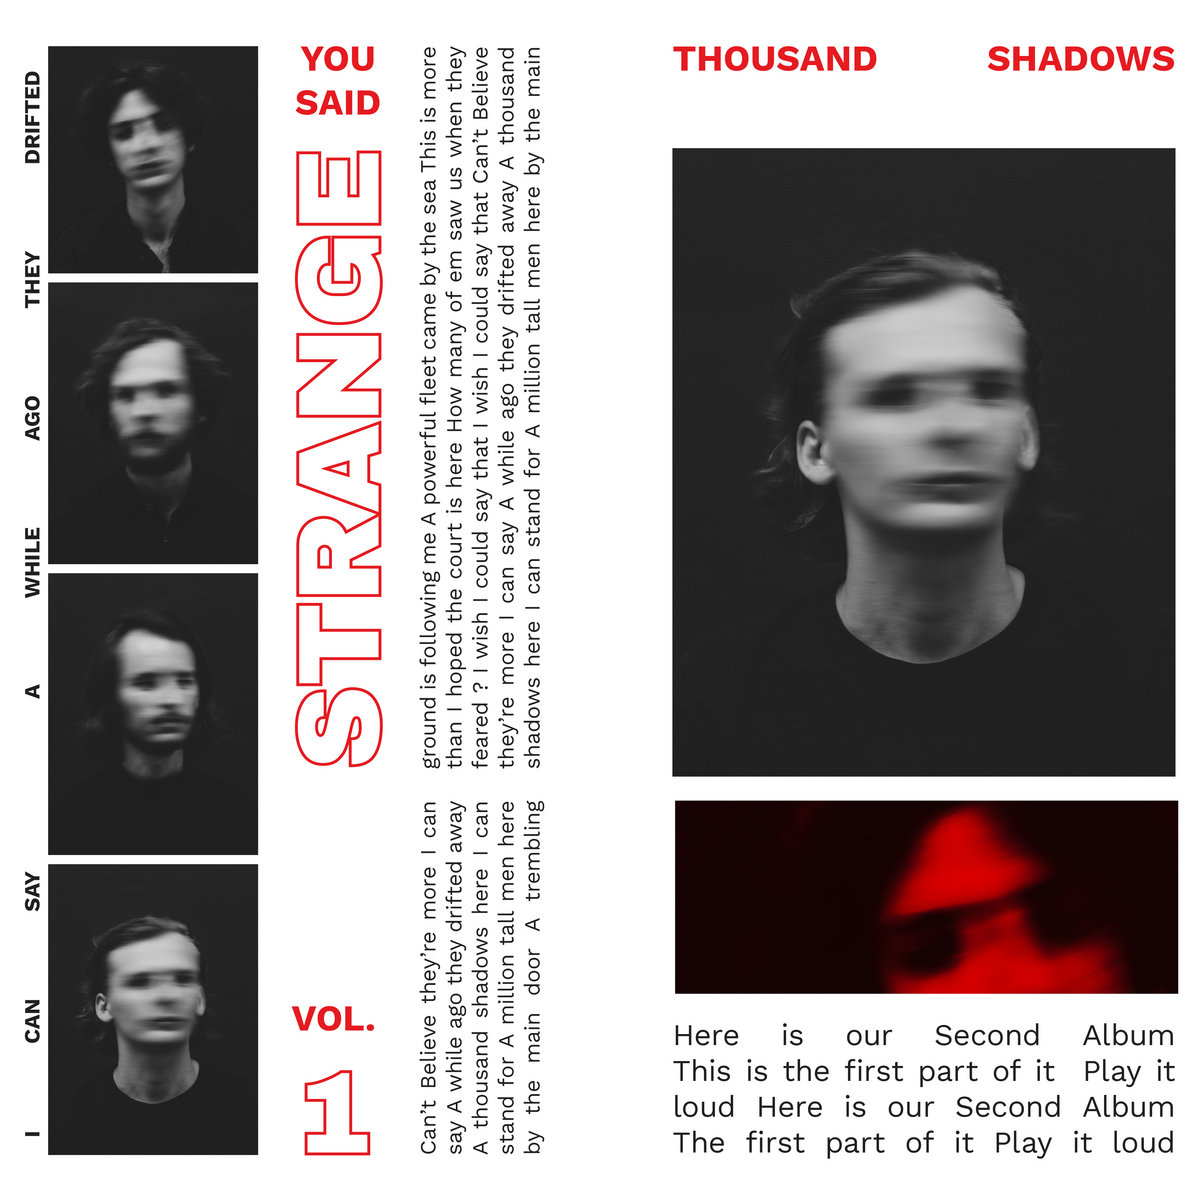 ou Said Strange - Thousand Shadows Vol 1